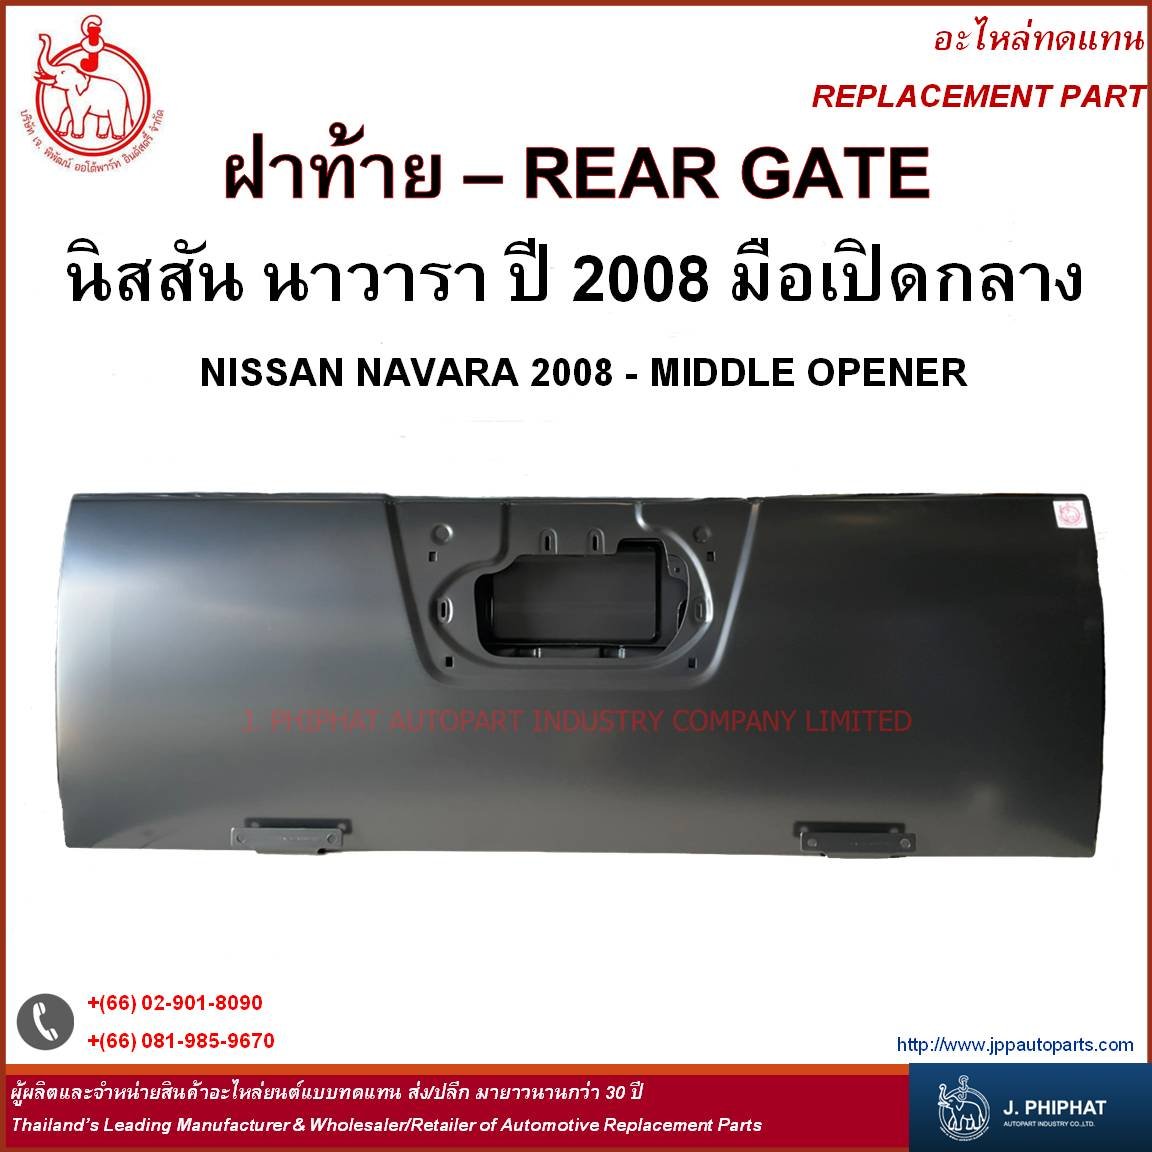 Rear Gate - Nissan NAVARA '08 Middle opener